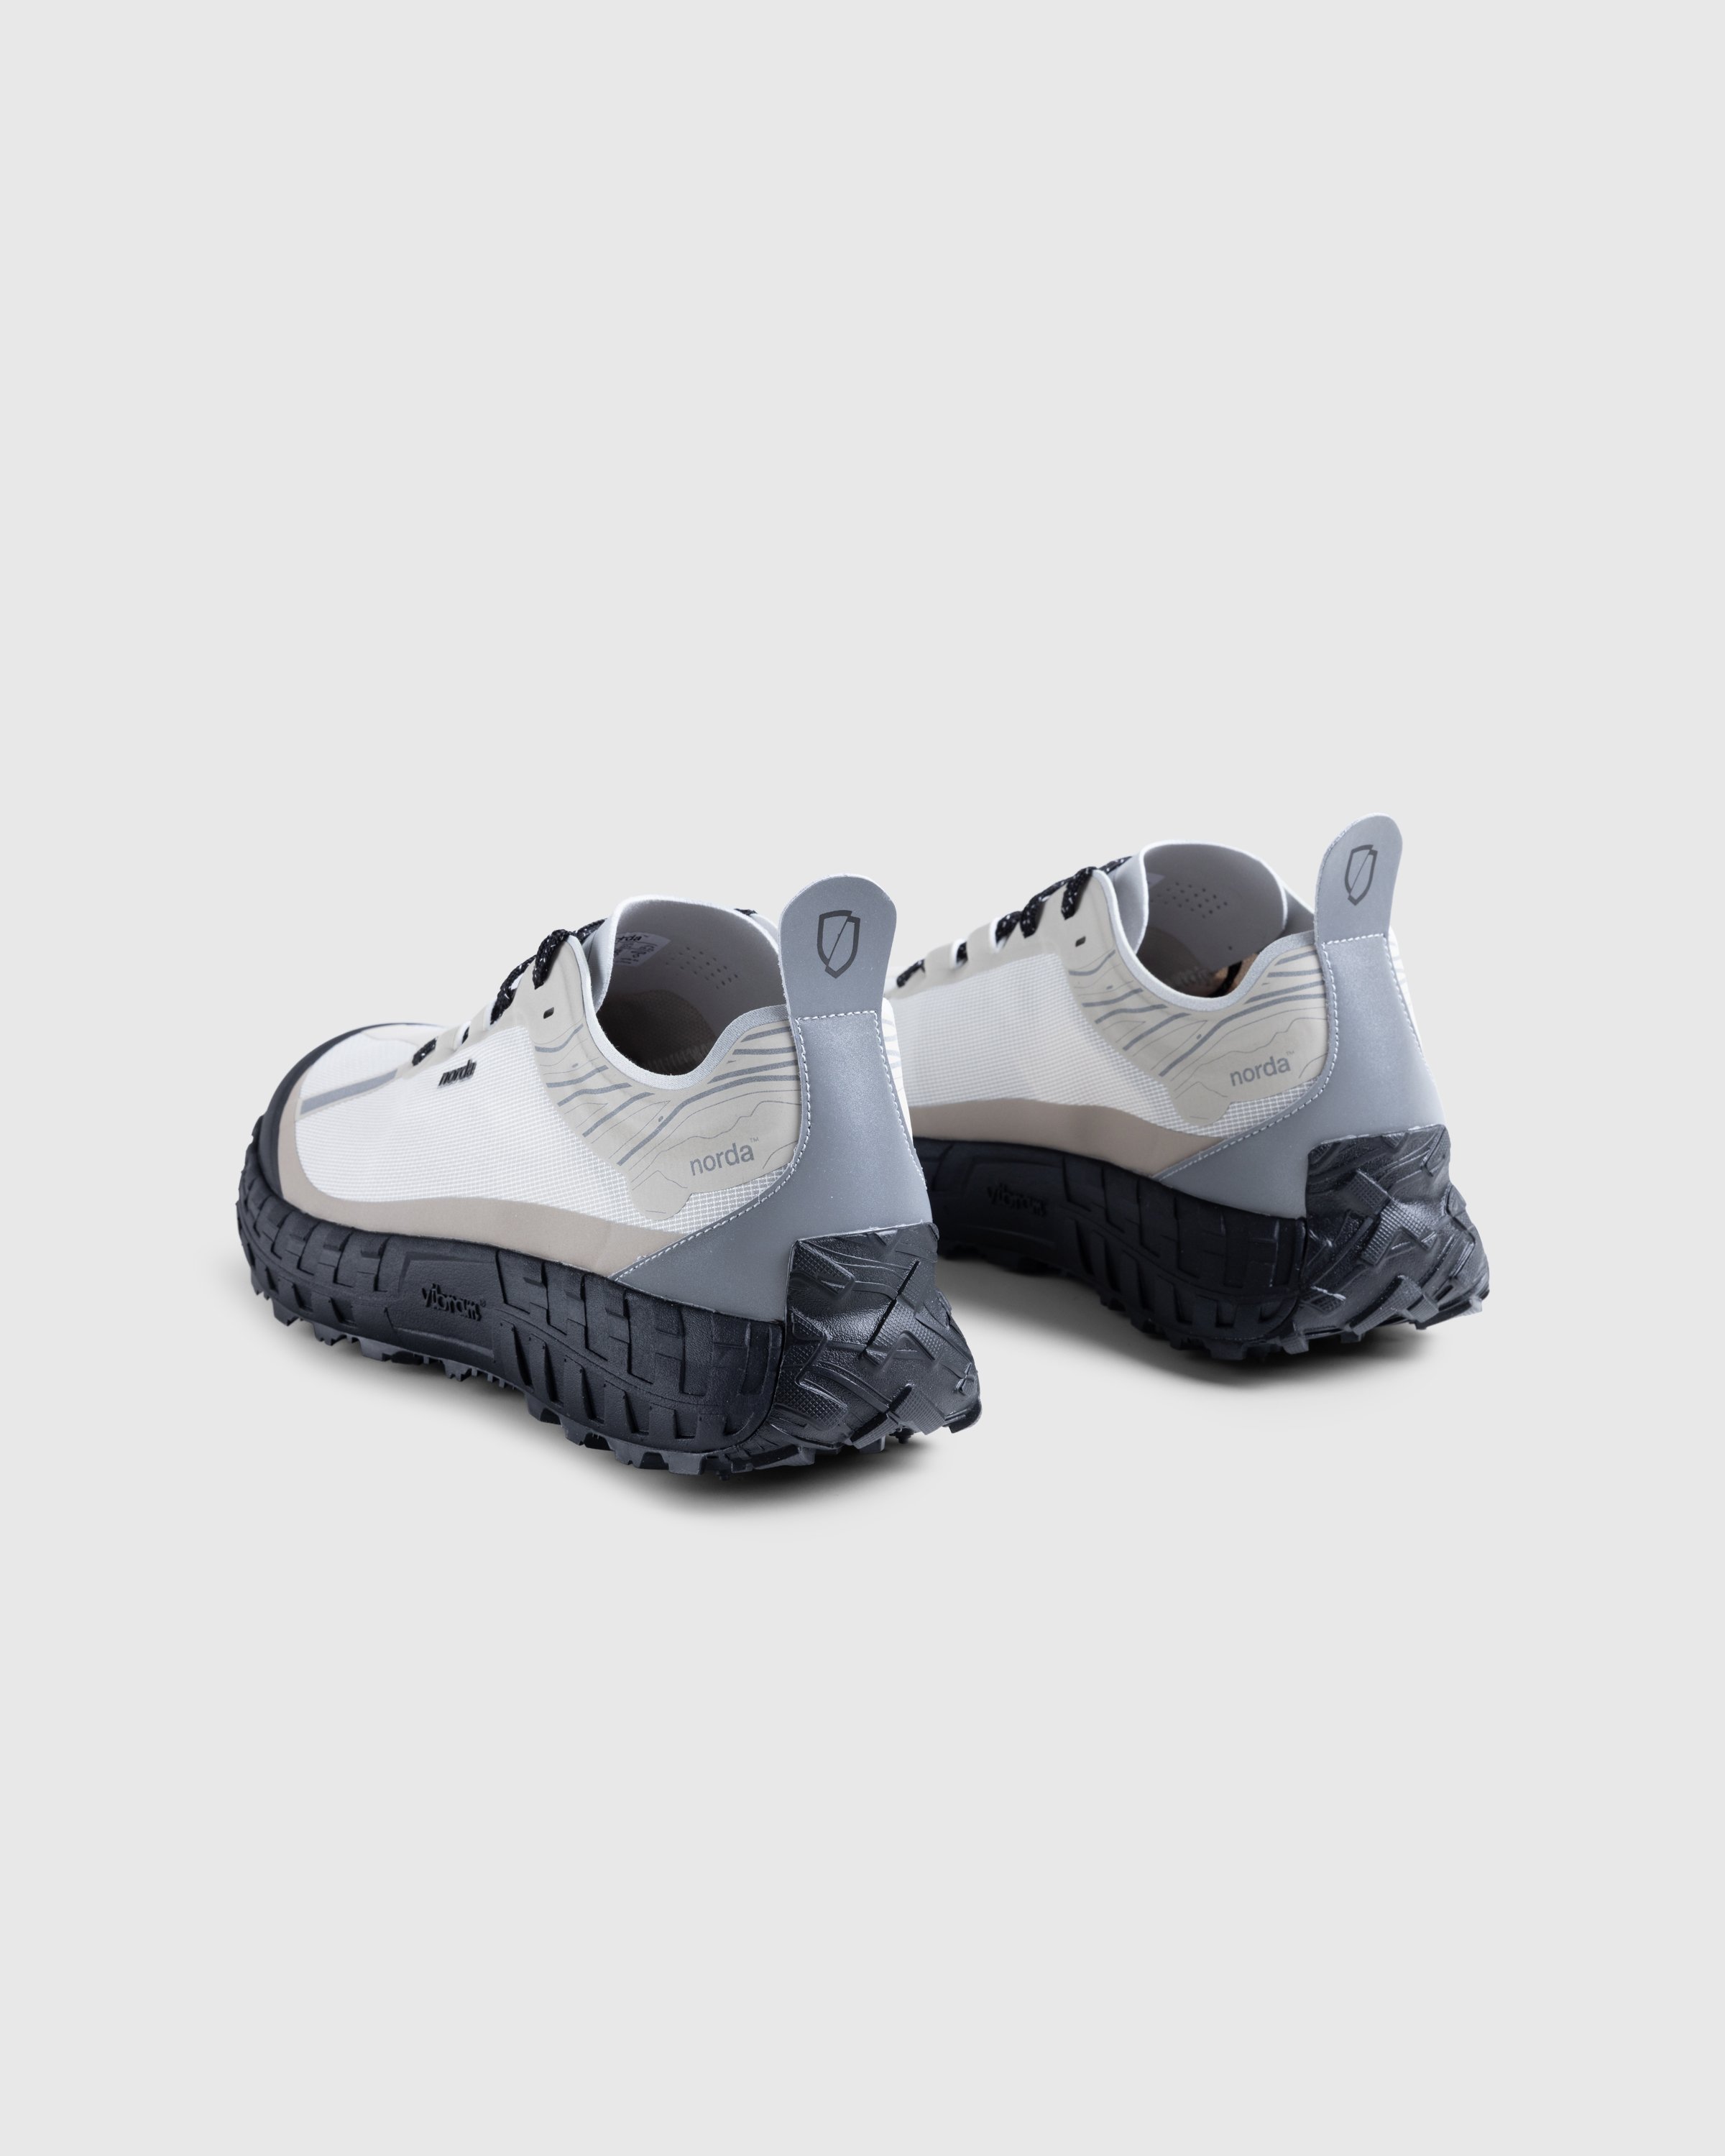 Norda - NORDA001-W - Footwear - Grey - Image 4